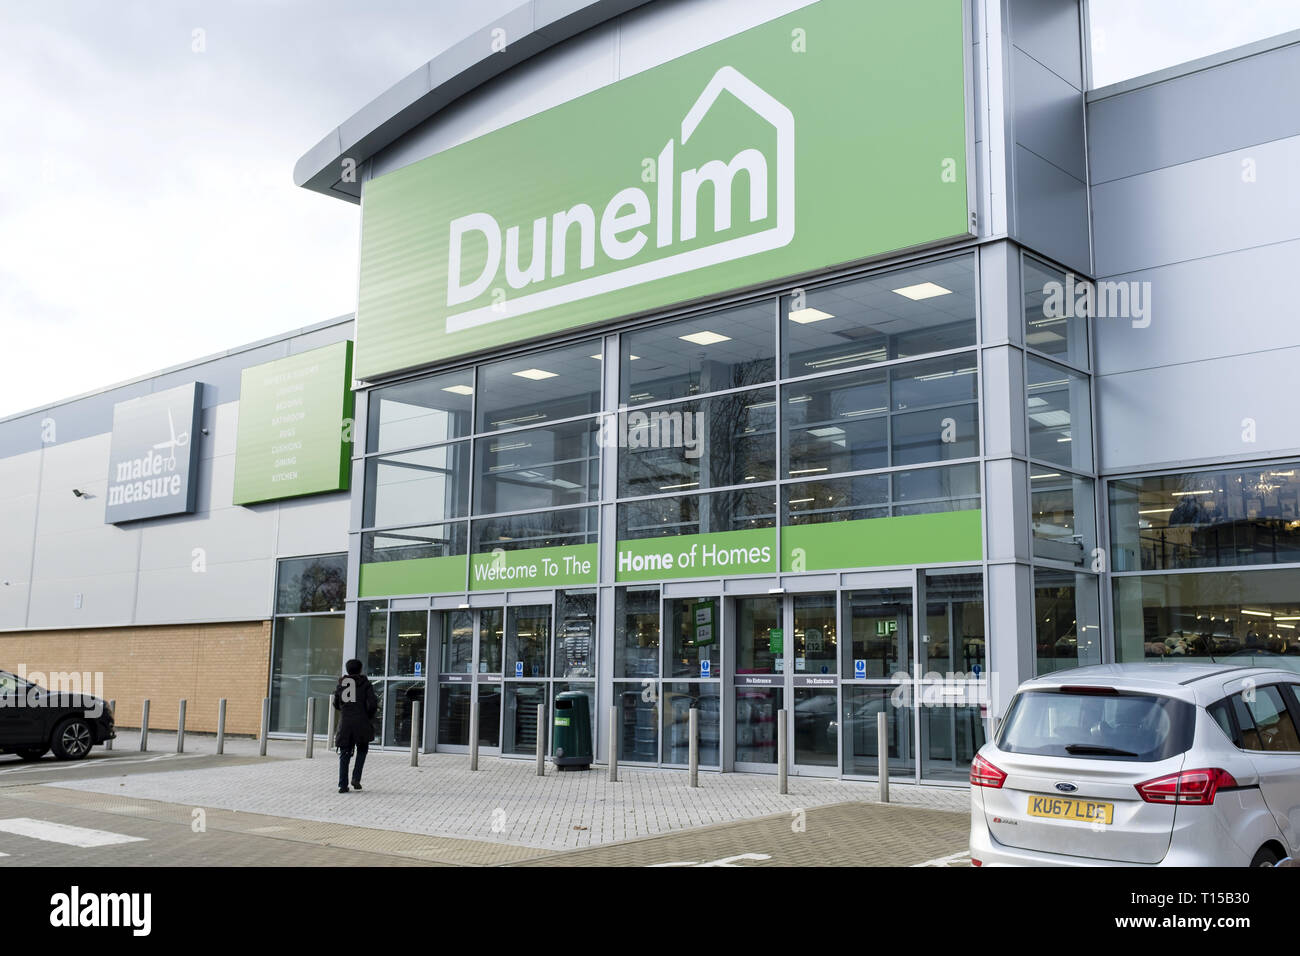 Milton Keynes, UK - February 11, 2019. Exterior of a Dunelm Store on a retail park in Milton Keynes, UK Stock Photo